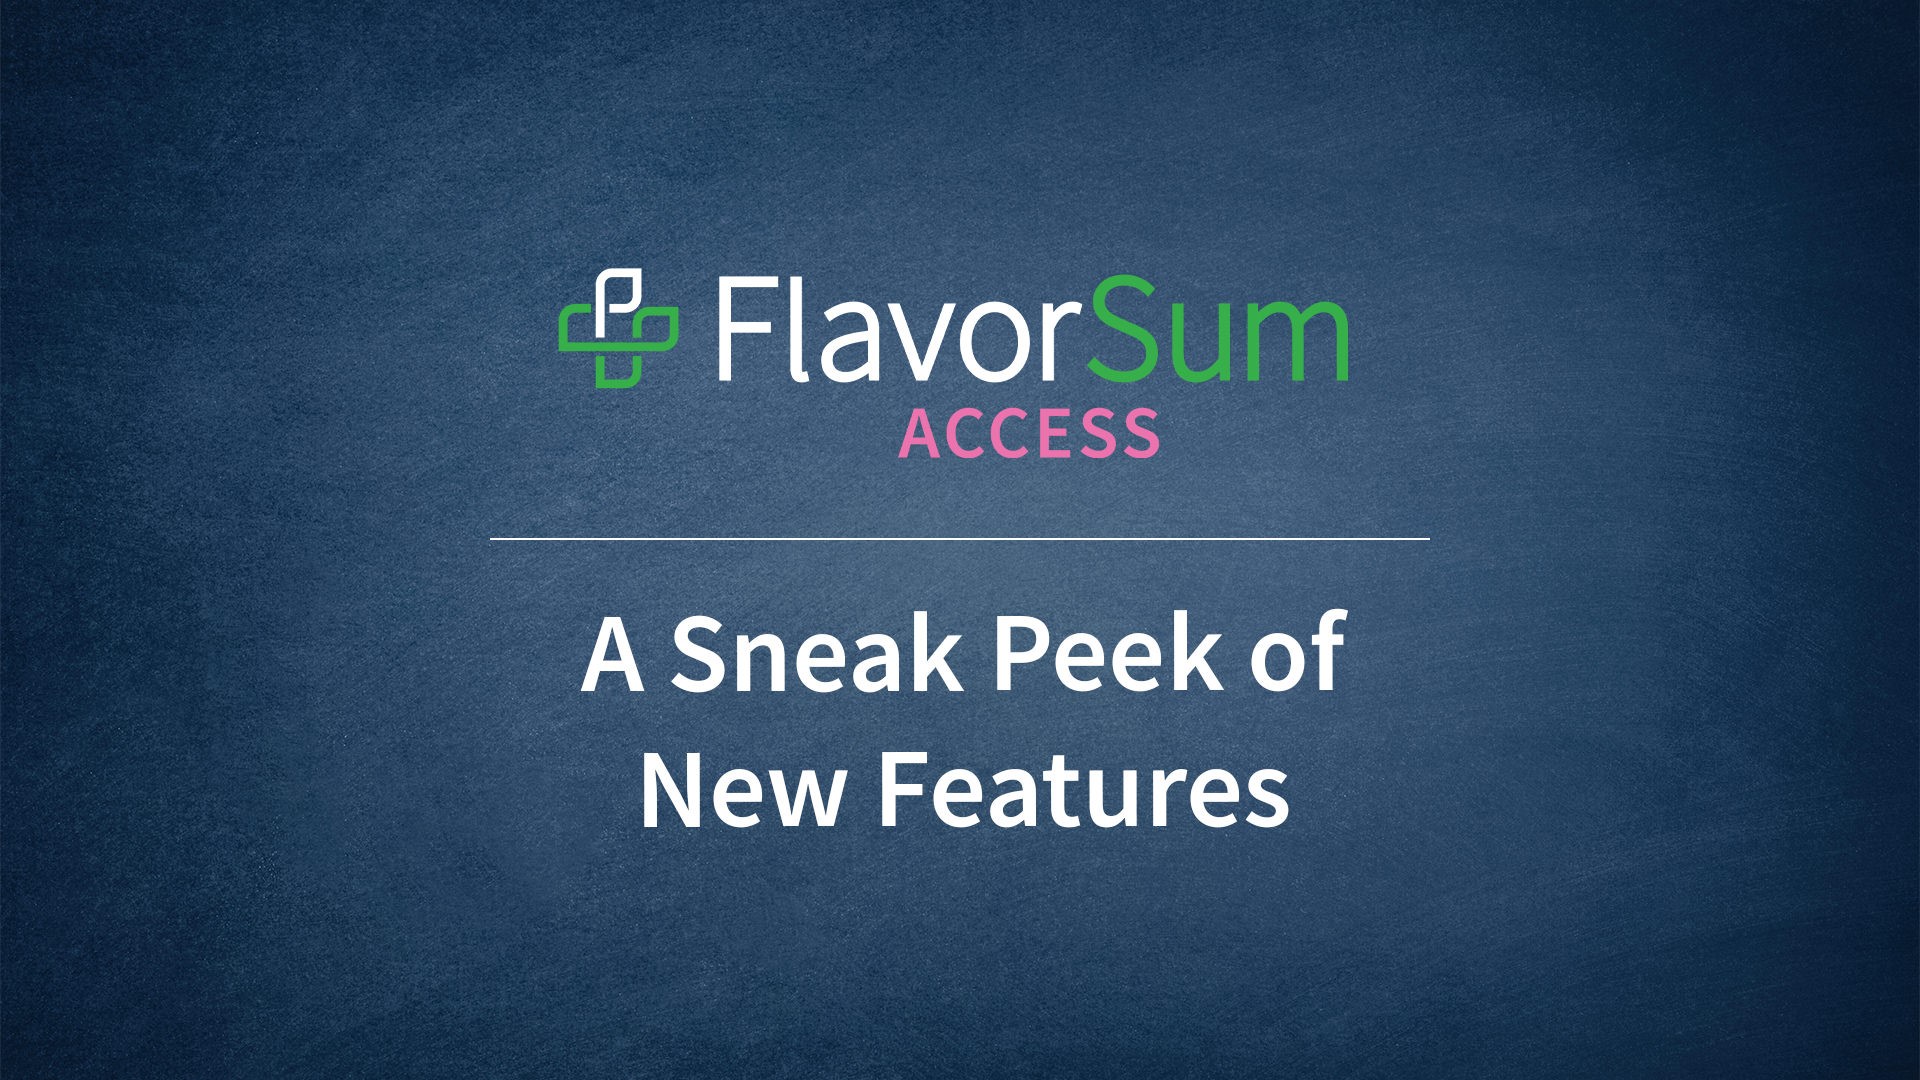 FlavorSum Access New Features Video